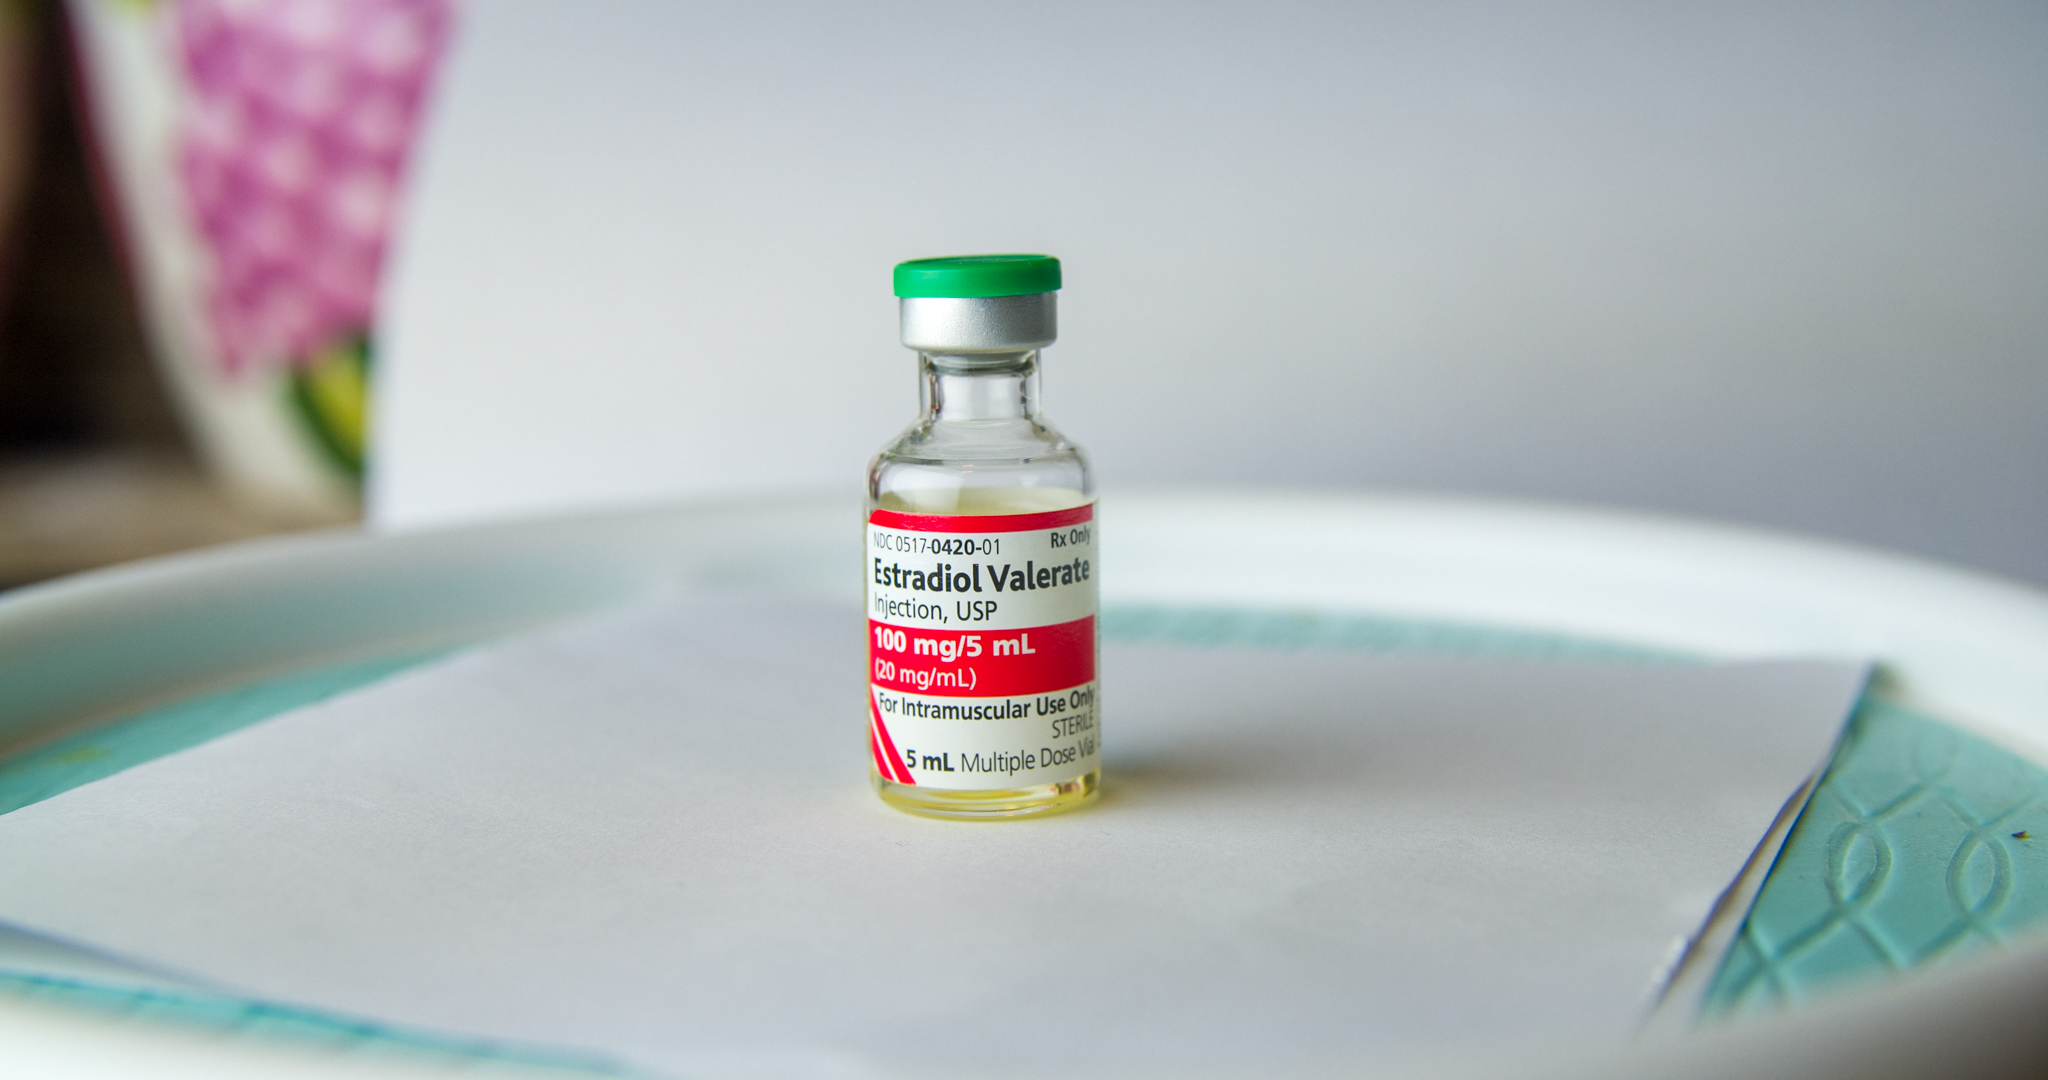 A macro shot of an Estradiol Valerate vial